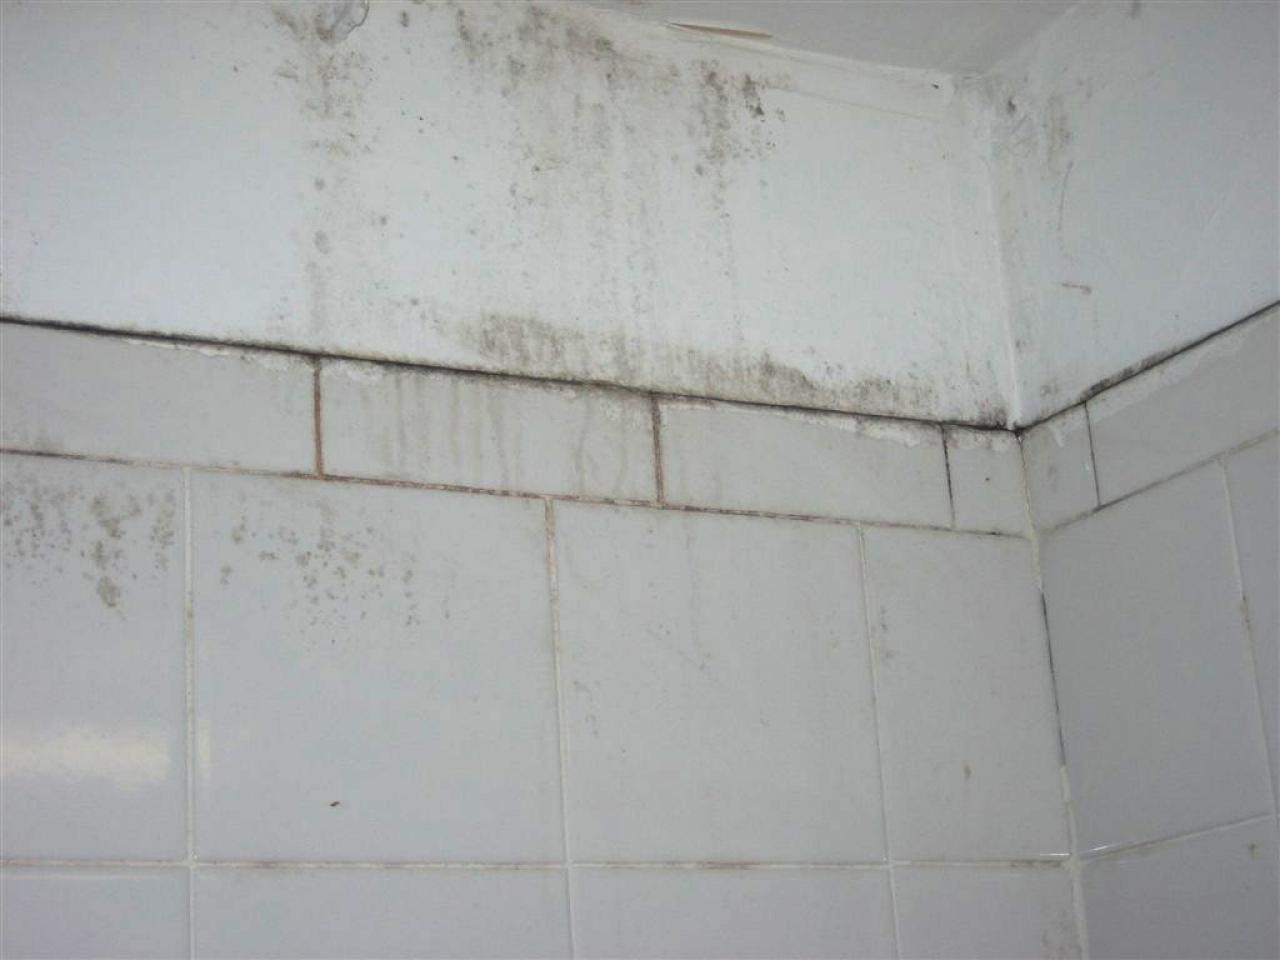 Bathroom Mold Issues Hgtv